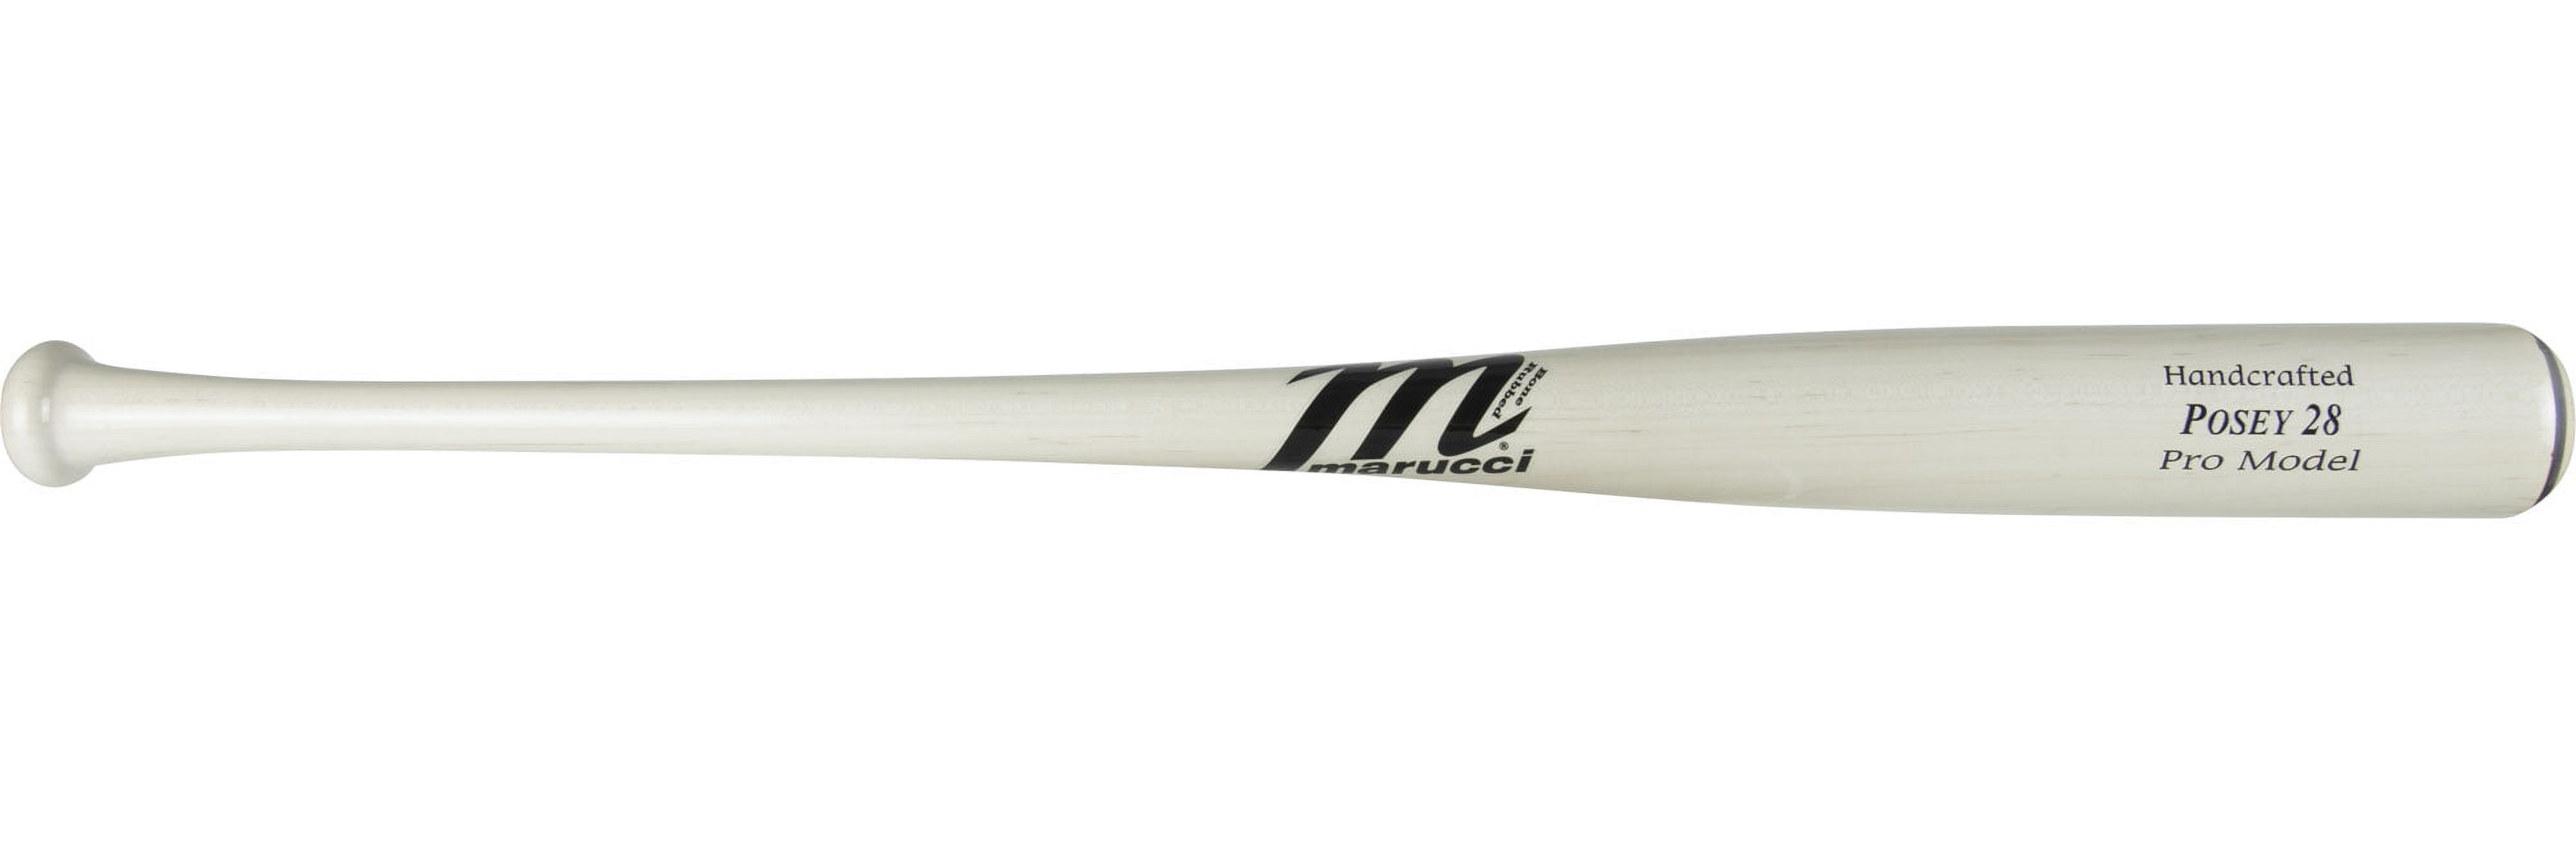 Marucci Buster Posey Maple Wood Baseball Bat: POSEY28 Whitewash Adult - image 1 of 5